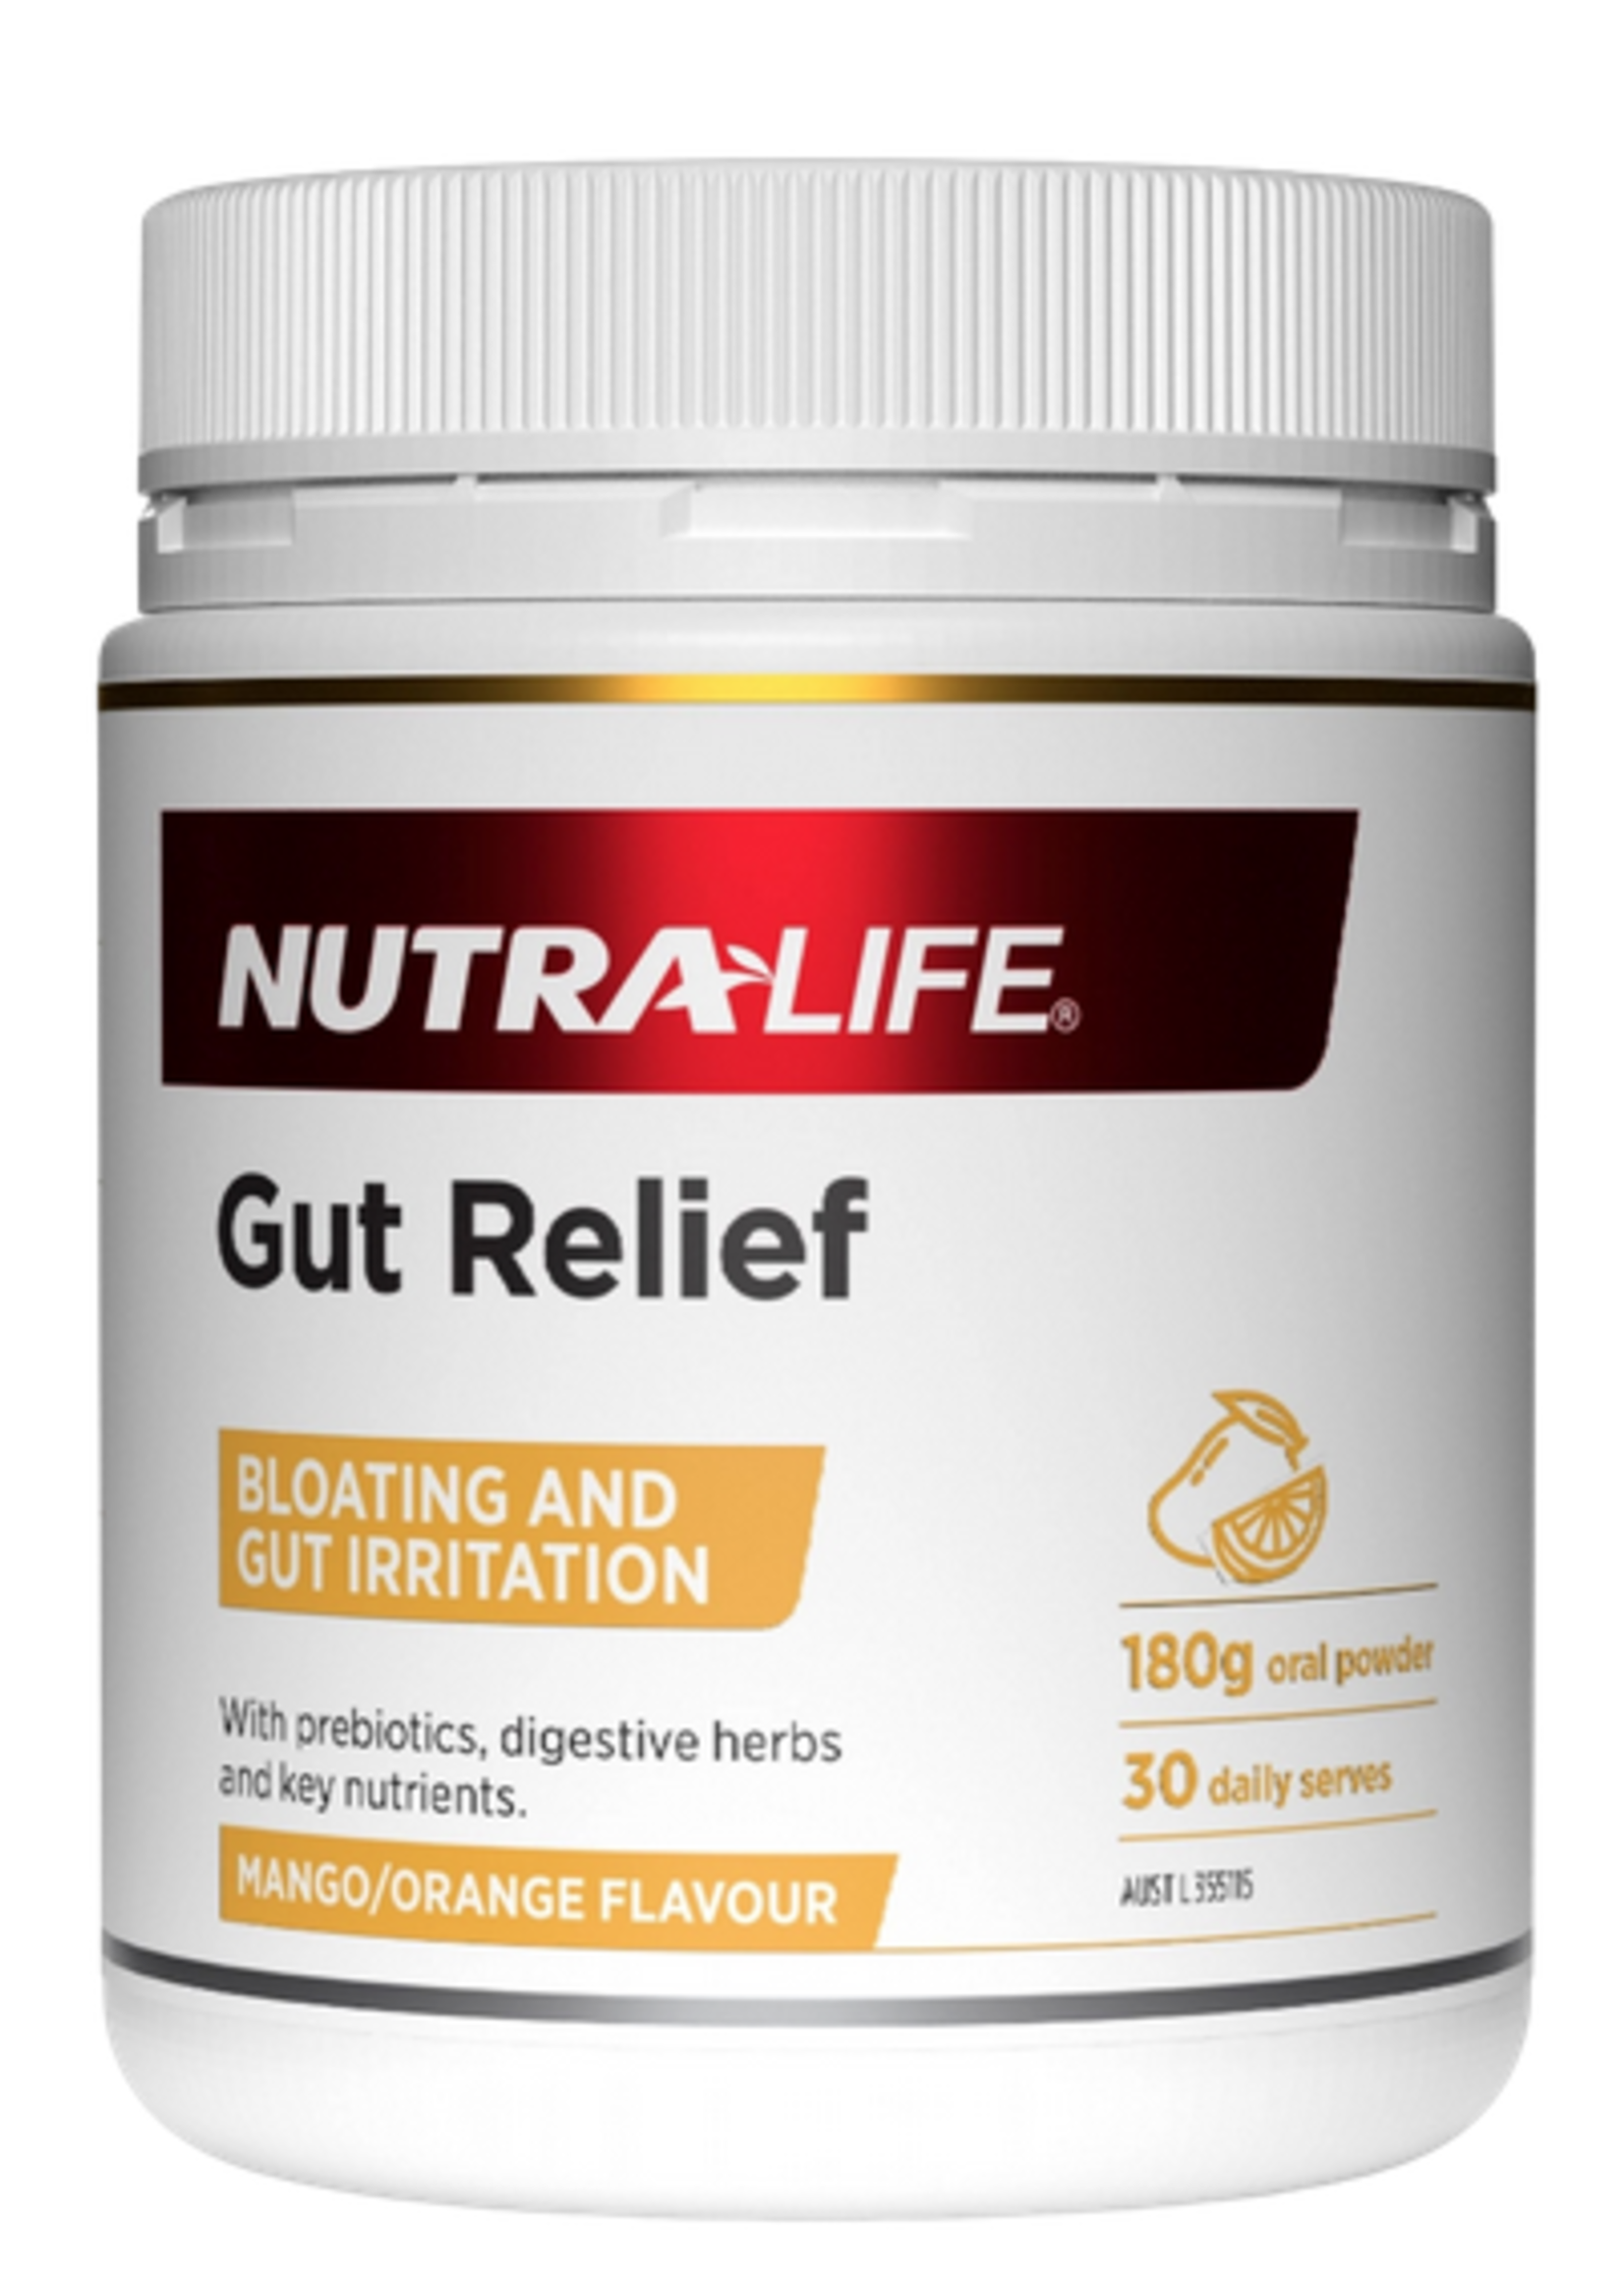 NutraLife Nutralife Gut Relief 180 g Mango/Orange Relief